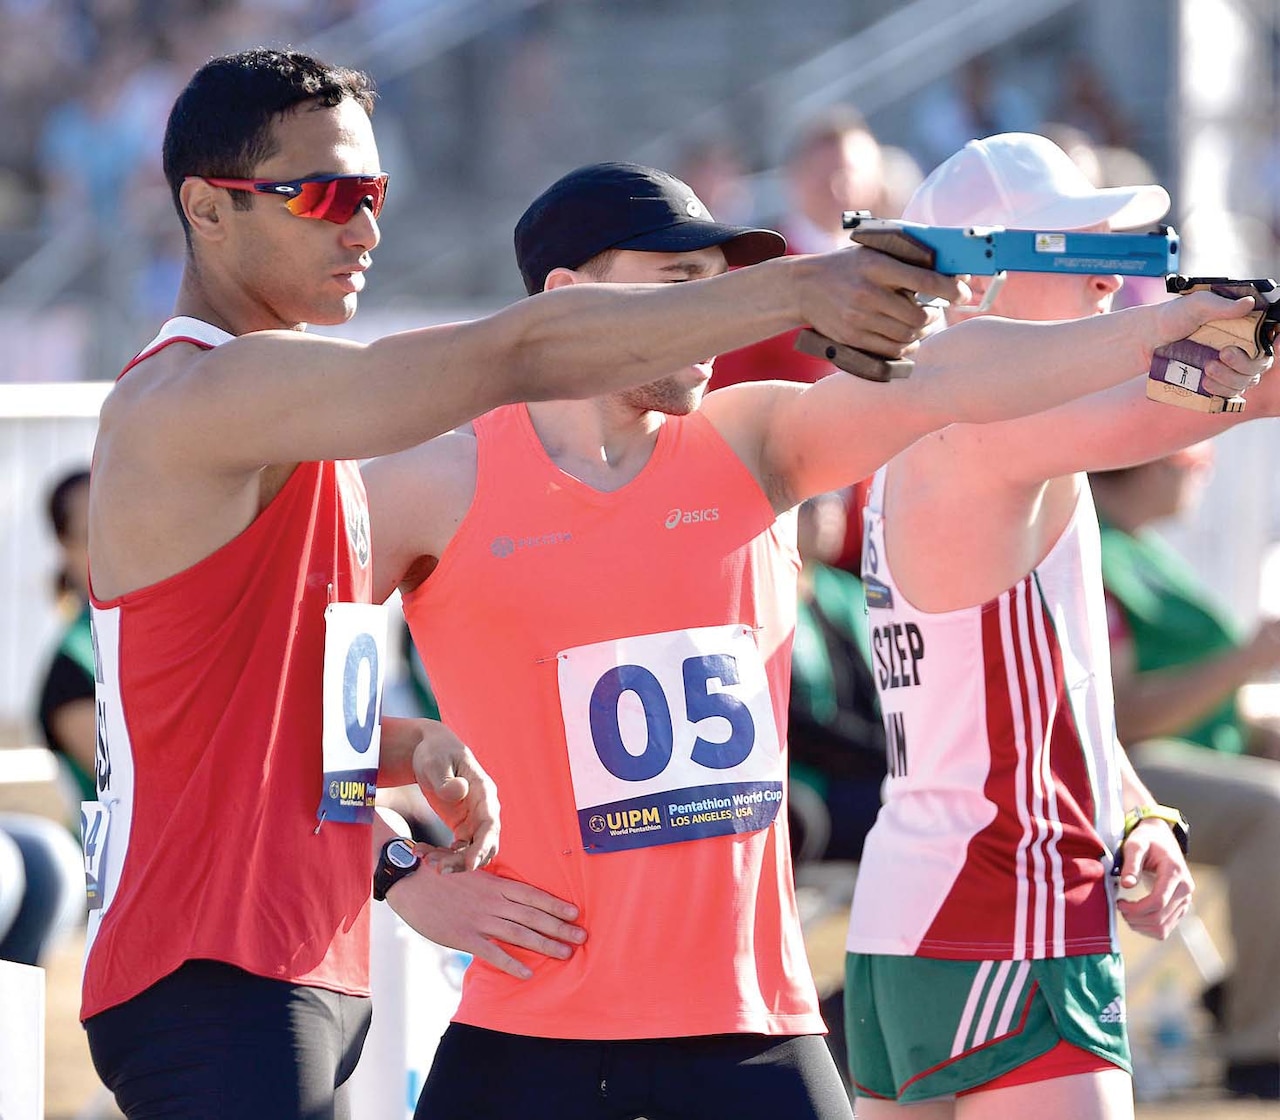 Men in athletic gear shoot guns during a pentathlon competition.